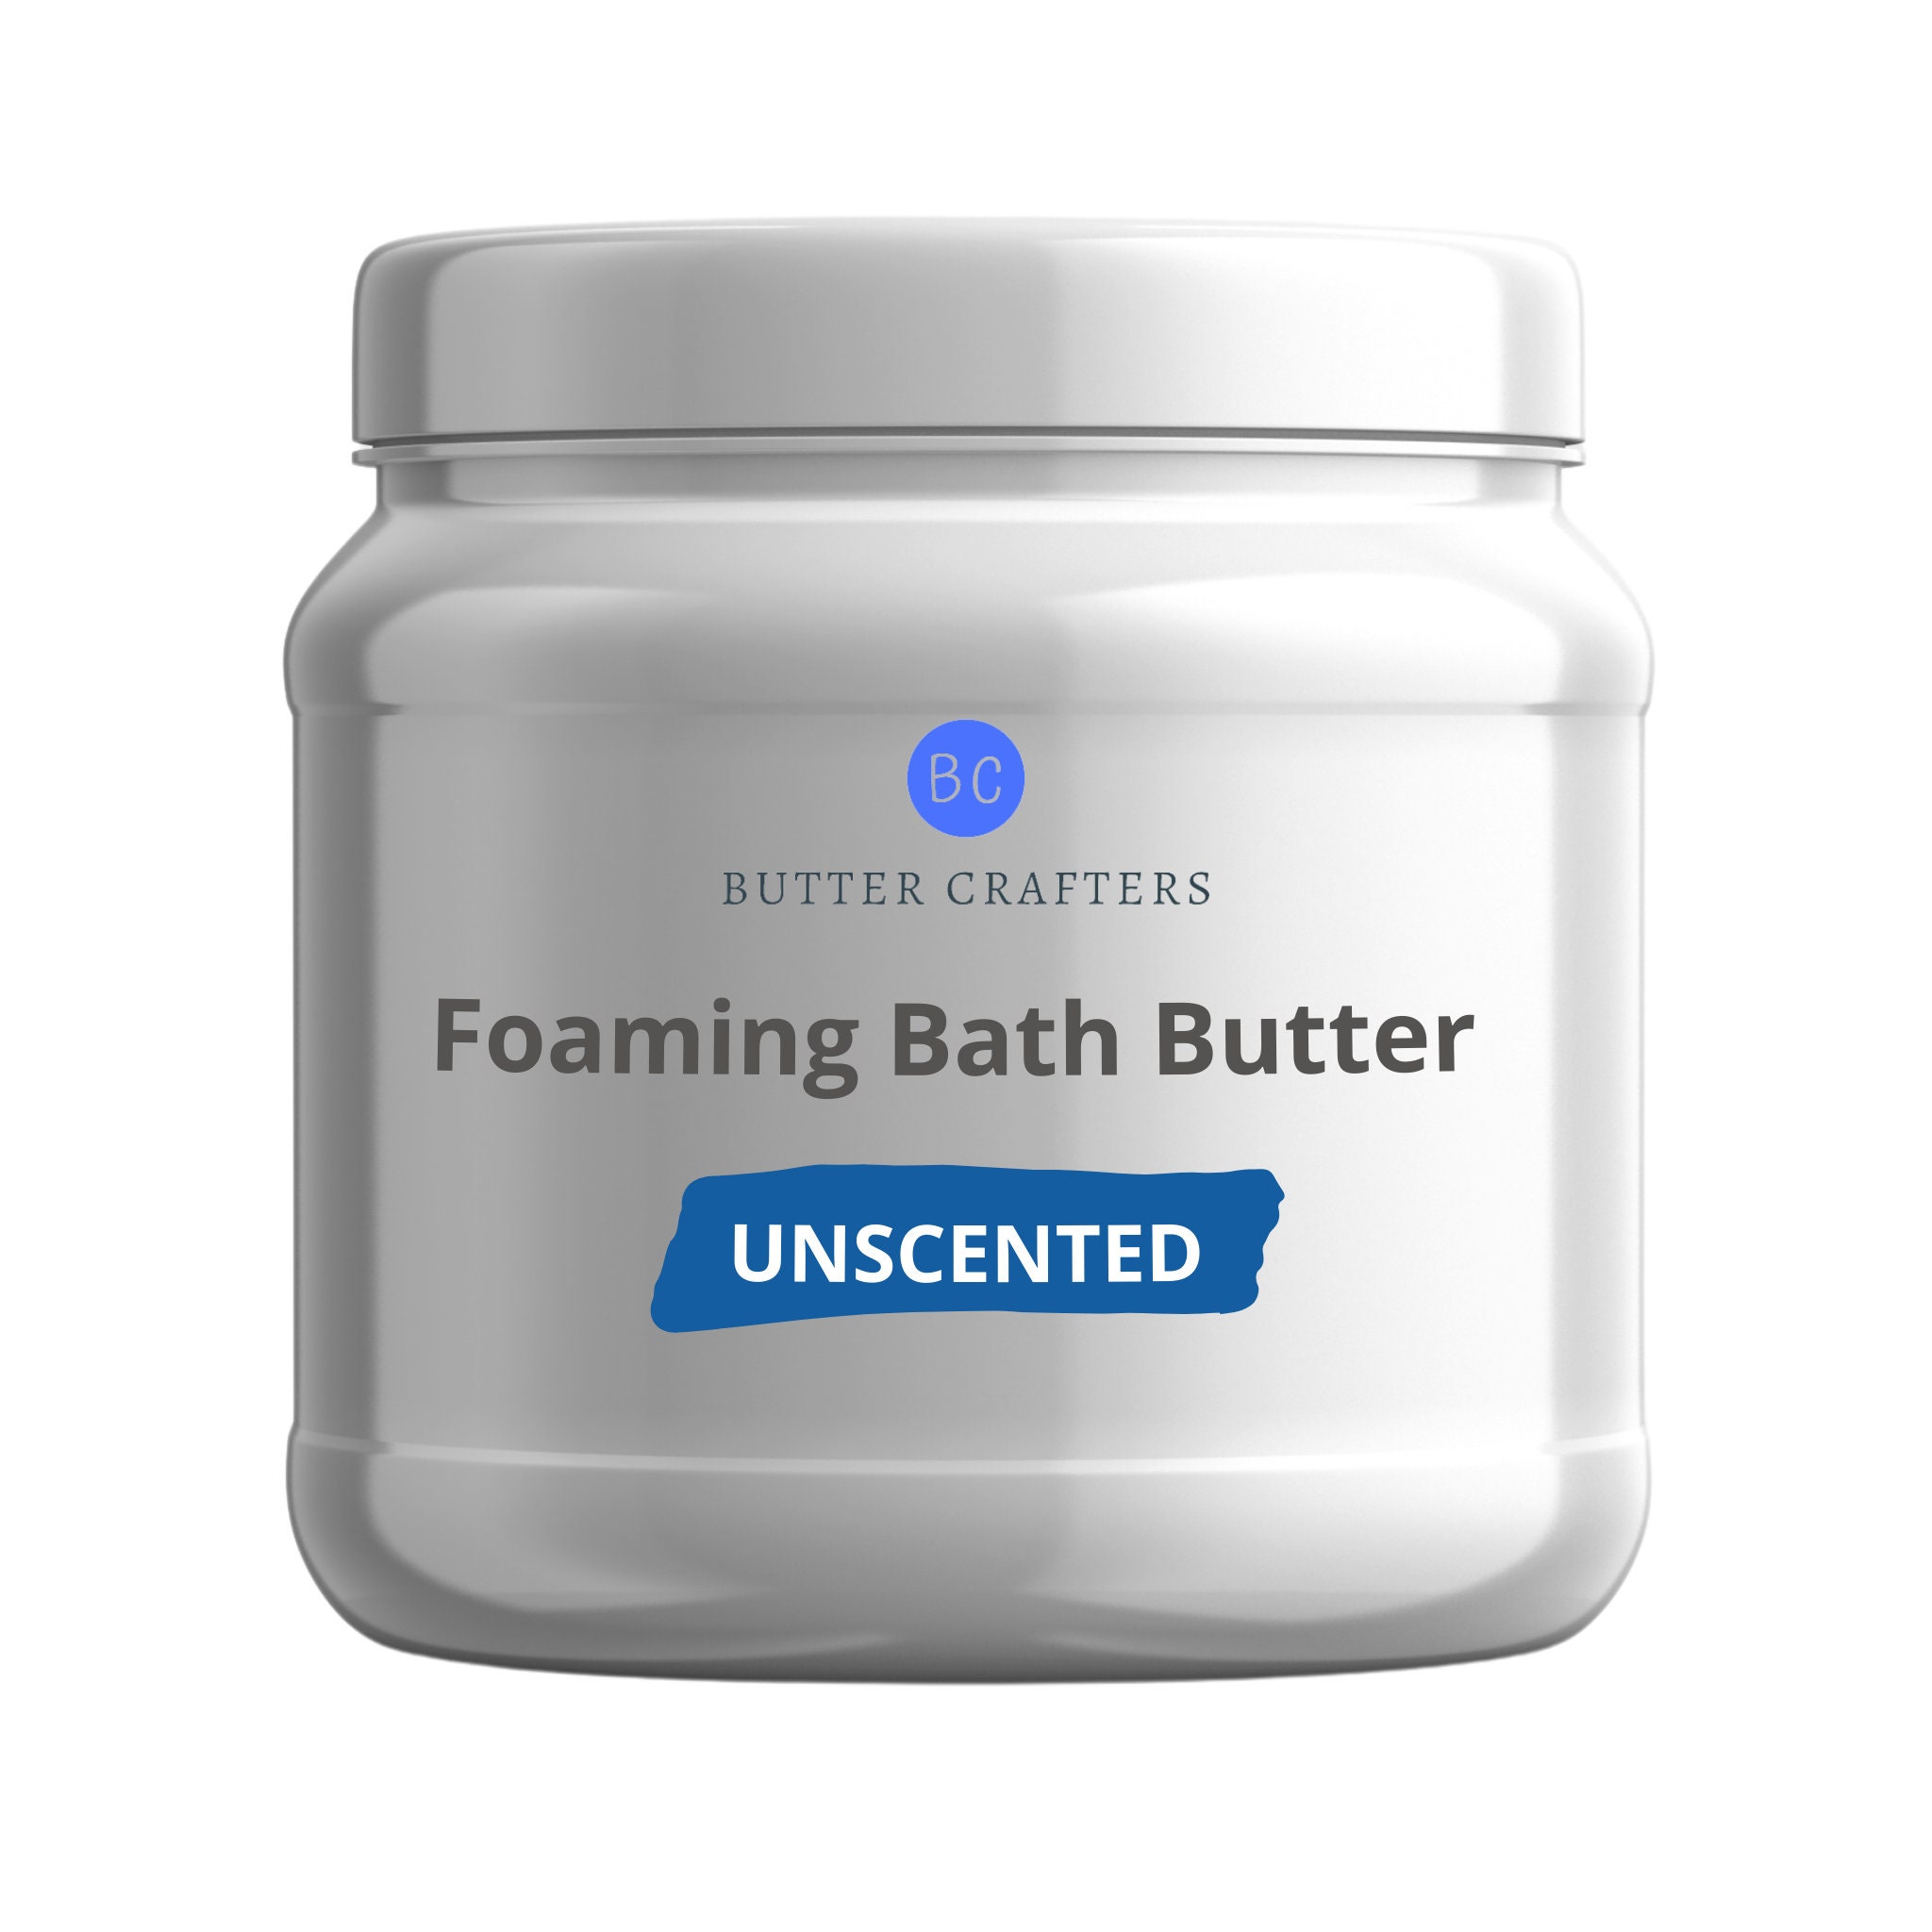 Foaming Bath Butter Base Whipped - Whipped Soap - 1lb Jar - HalalEveryDay -  Vegan - 100% Pure Premium Quality Scrub Skin Body Shower Shave Wash Bath